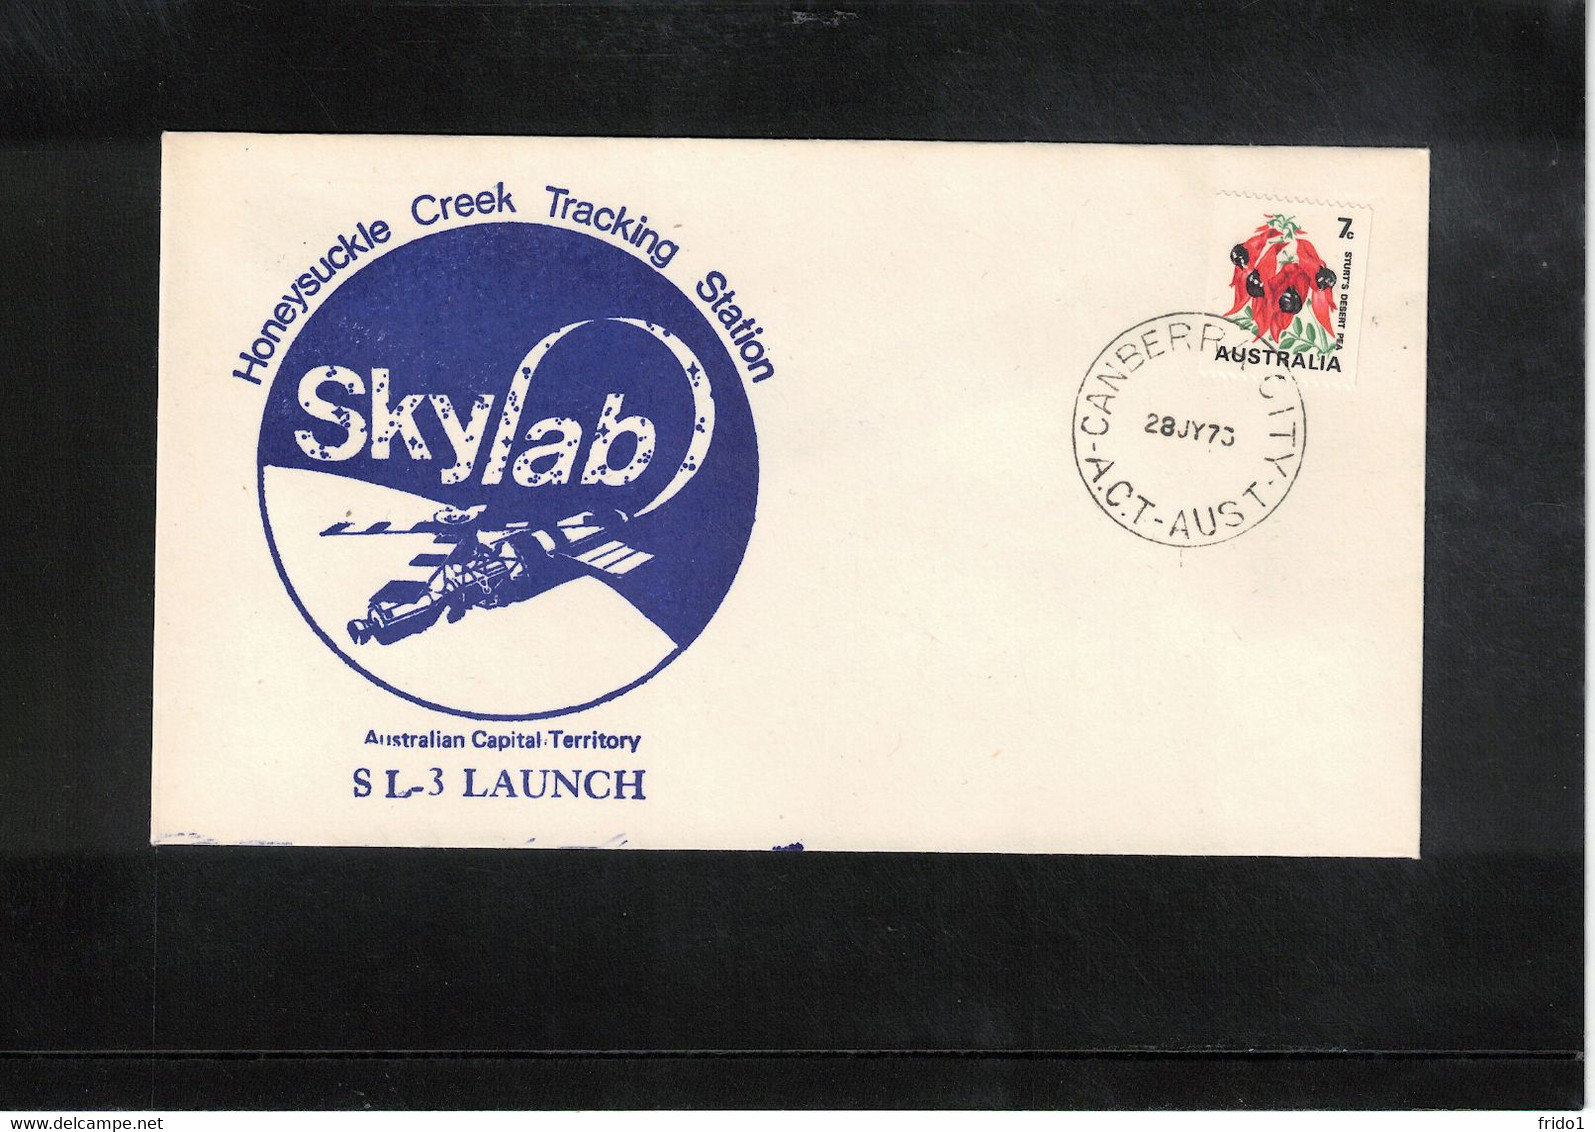 Australia 1973 Space / Raumfahrt Skylab 3 Launch - Honeysuckle Creek Tracking Station Interesting Cover - Oceania